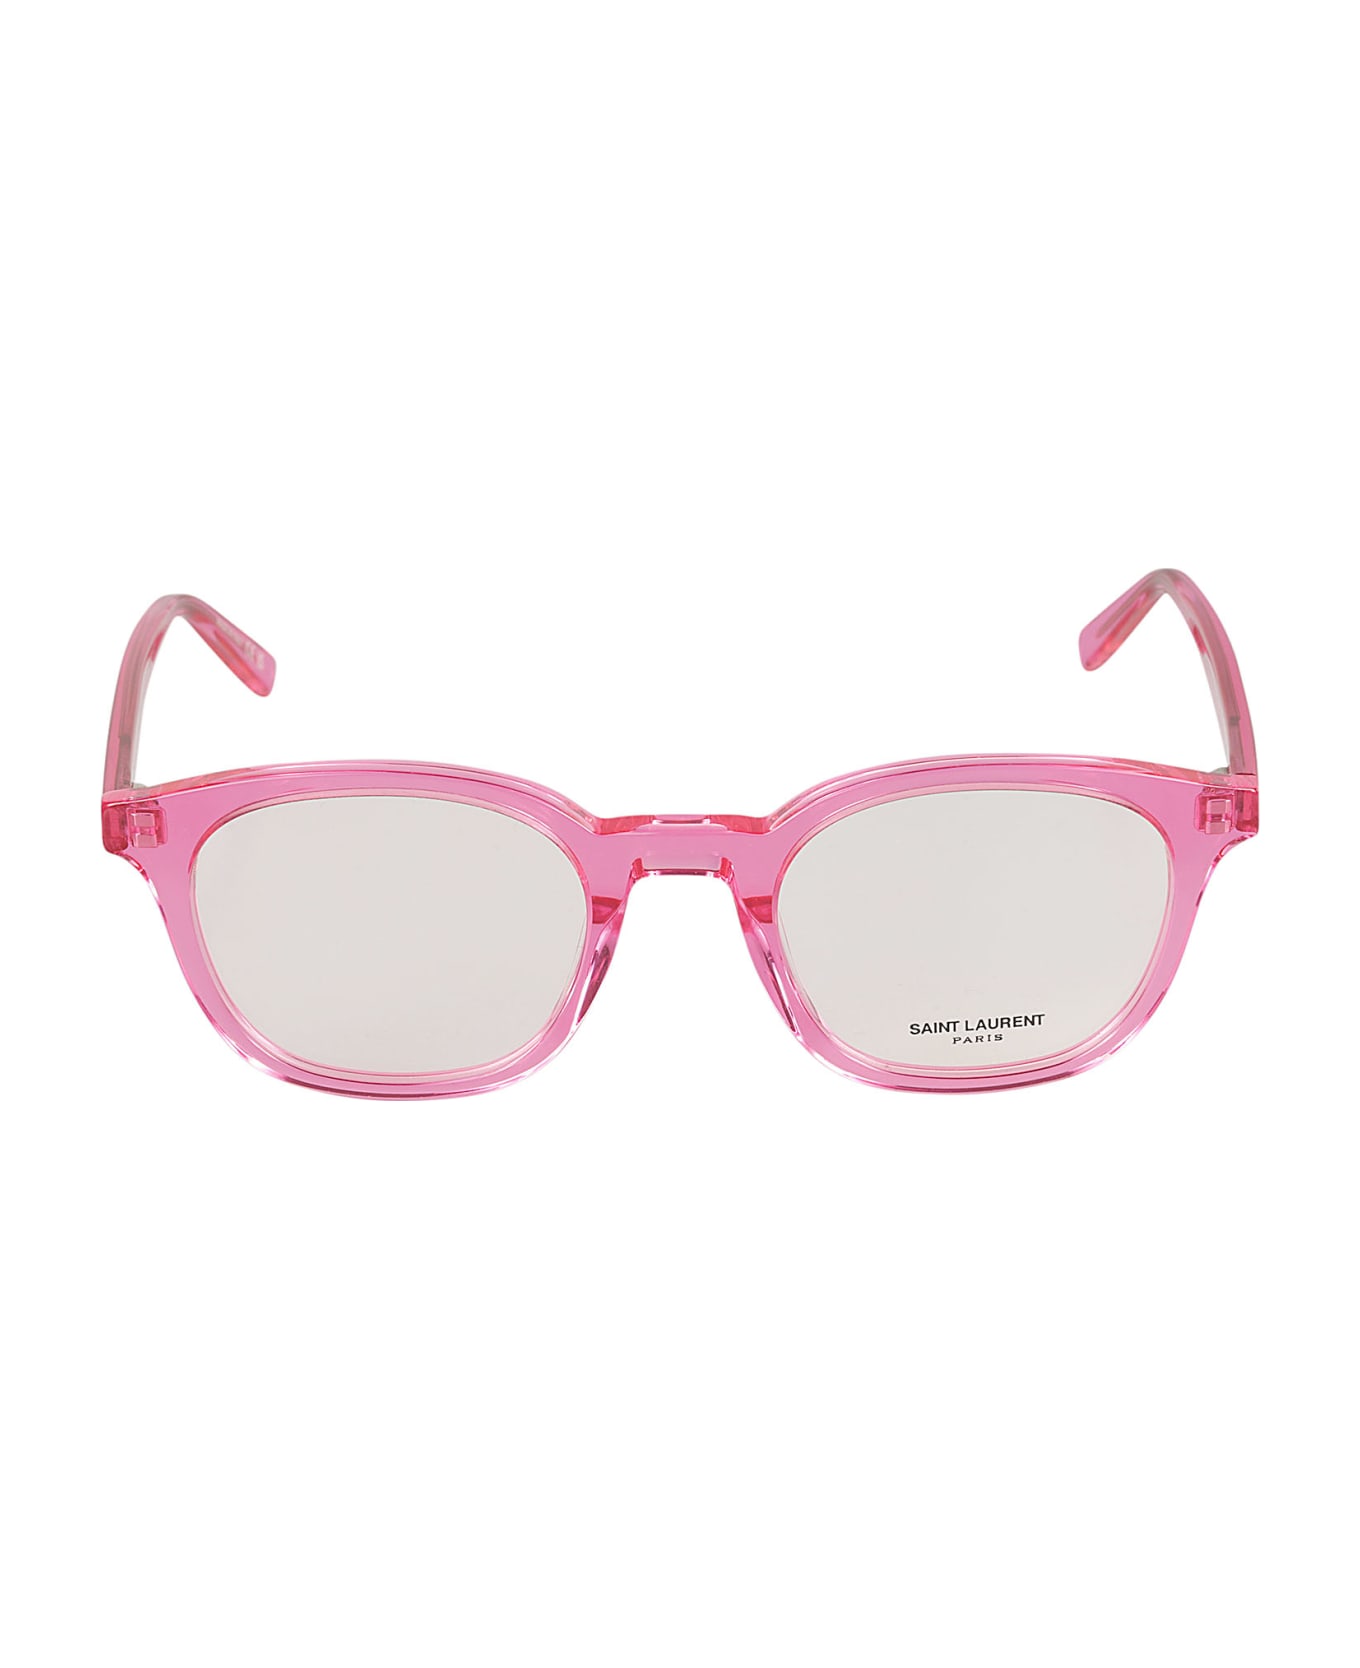 Saint Laurent Eyewear Round Frame Glasses - Fuchsia/Transparent